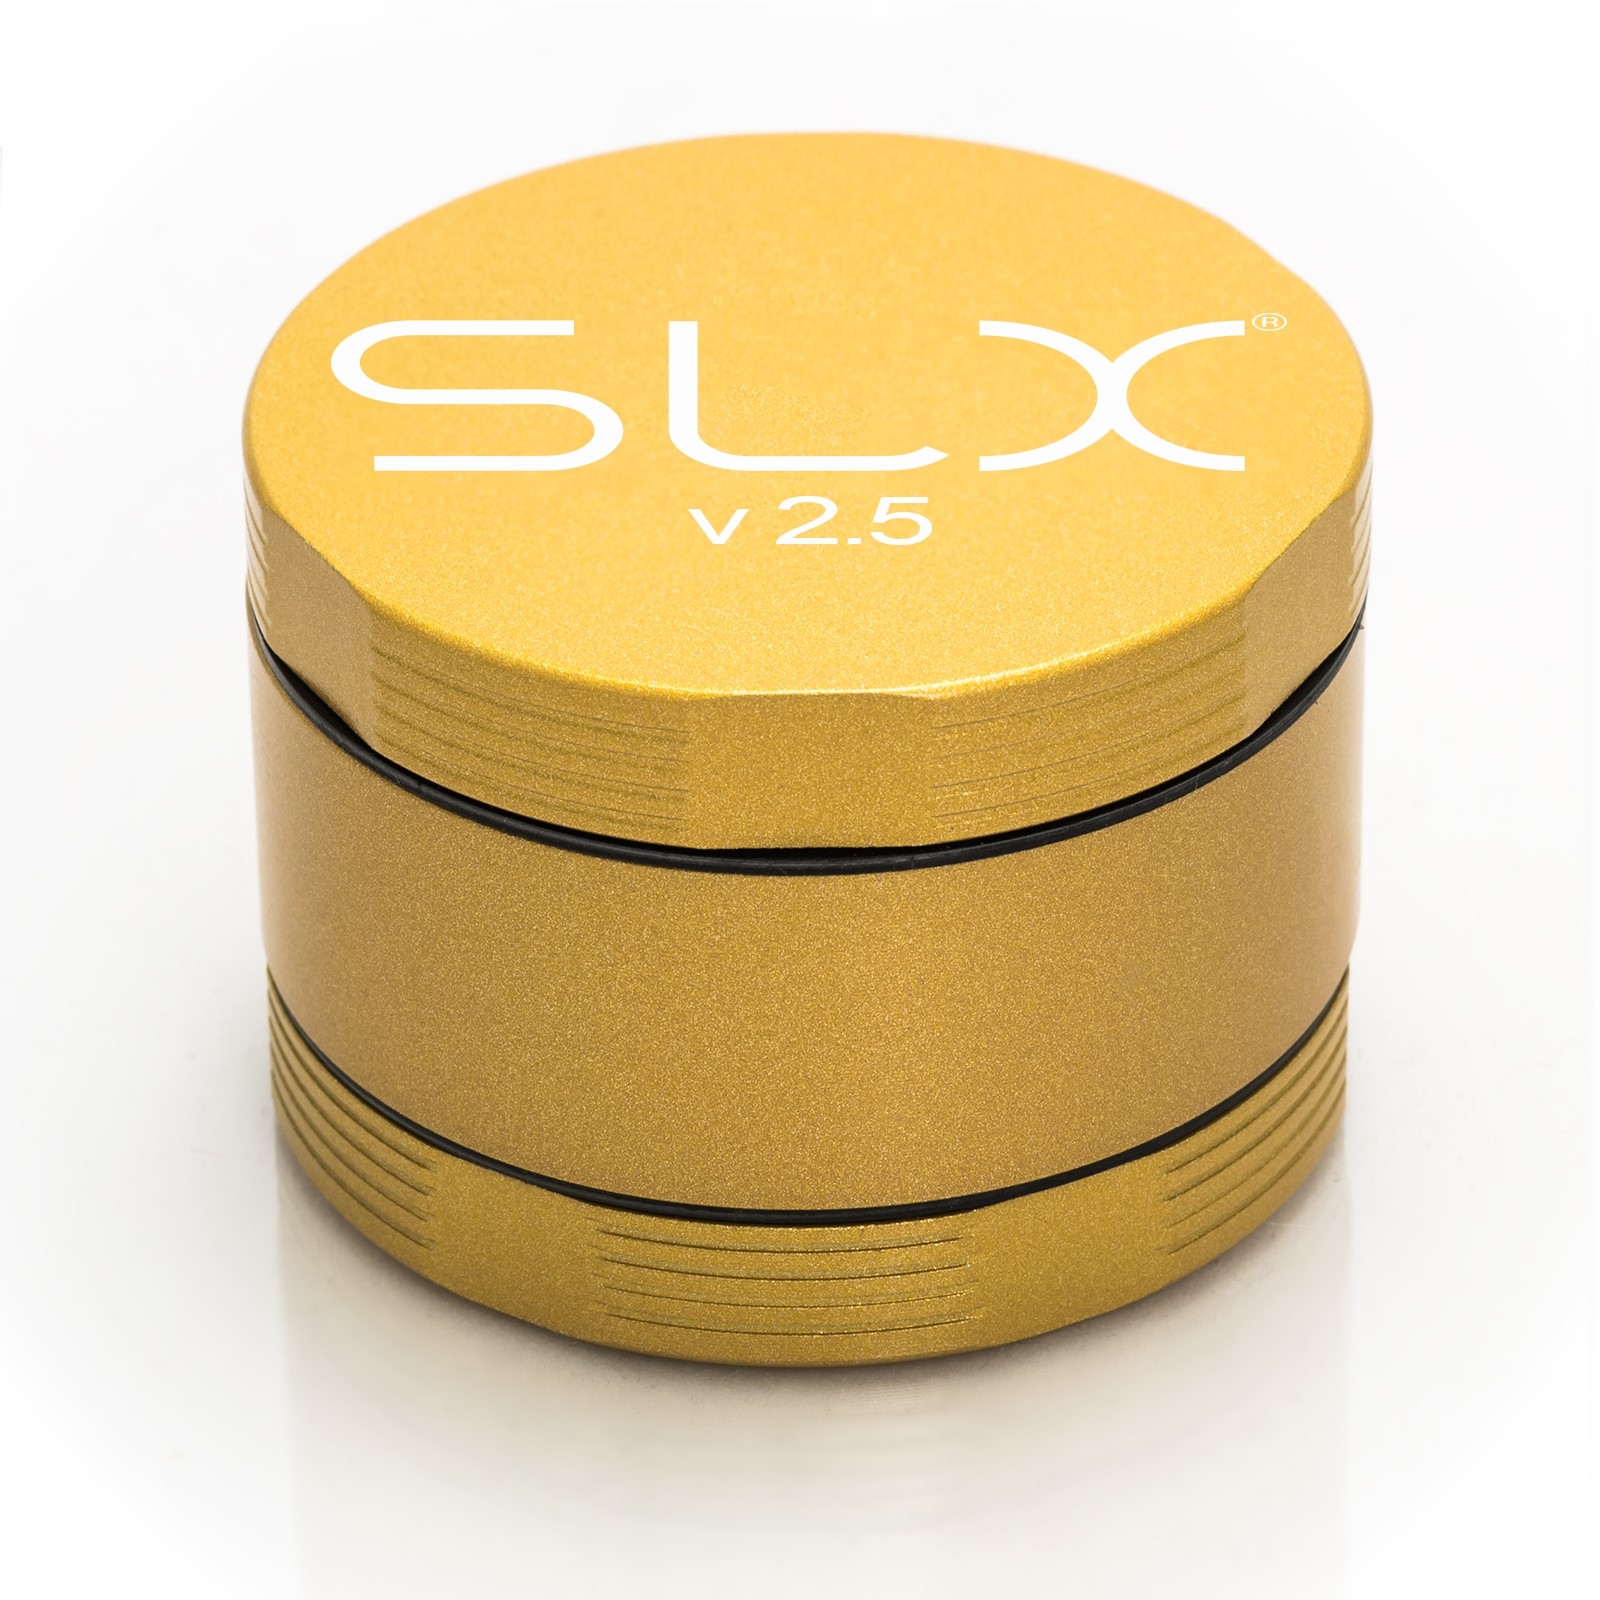 SLX-Grinder, golden yellow (K35)